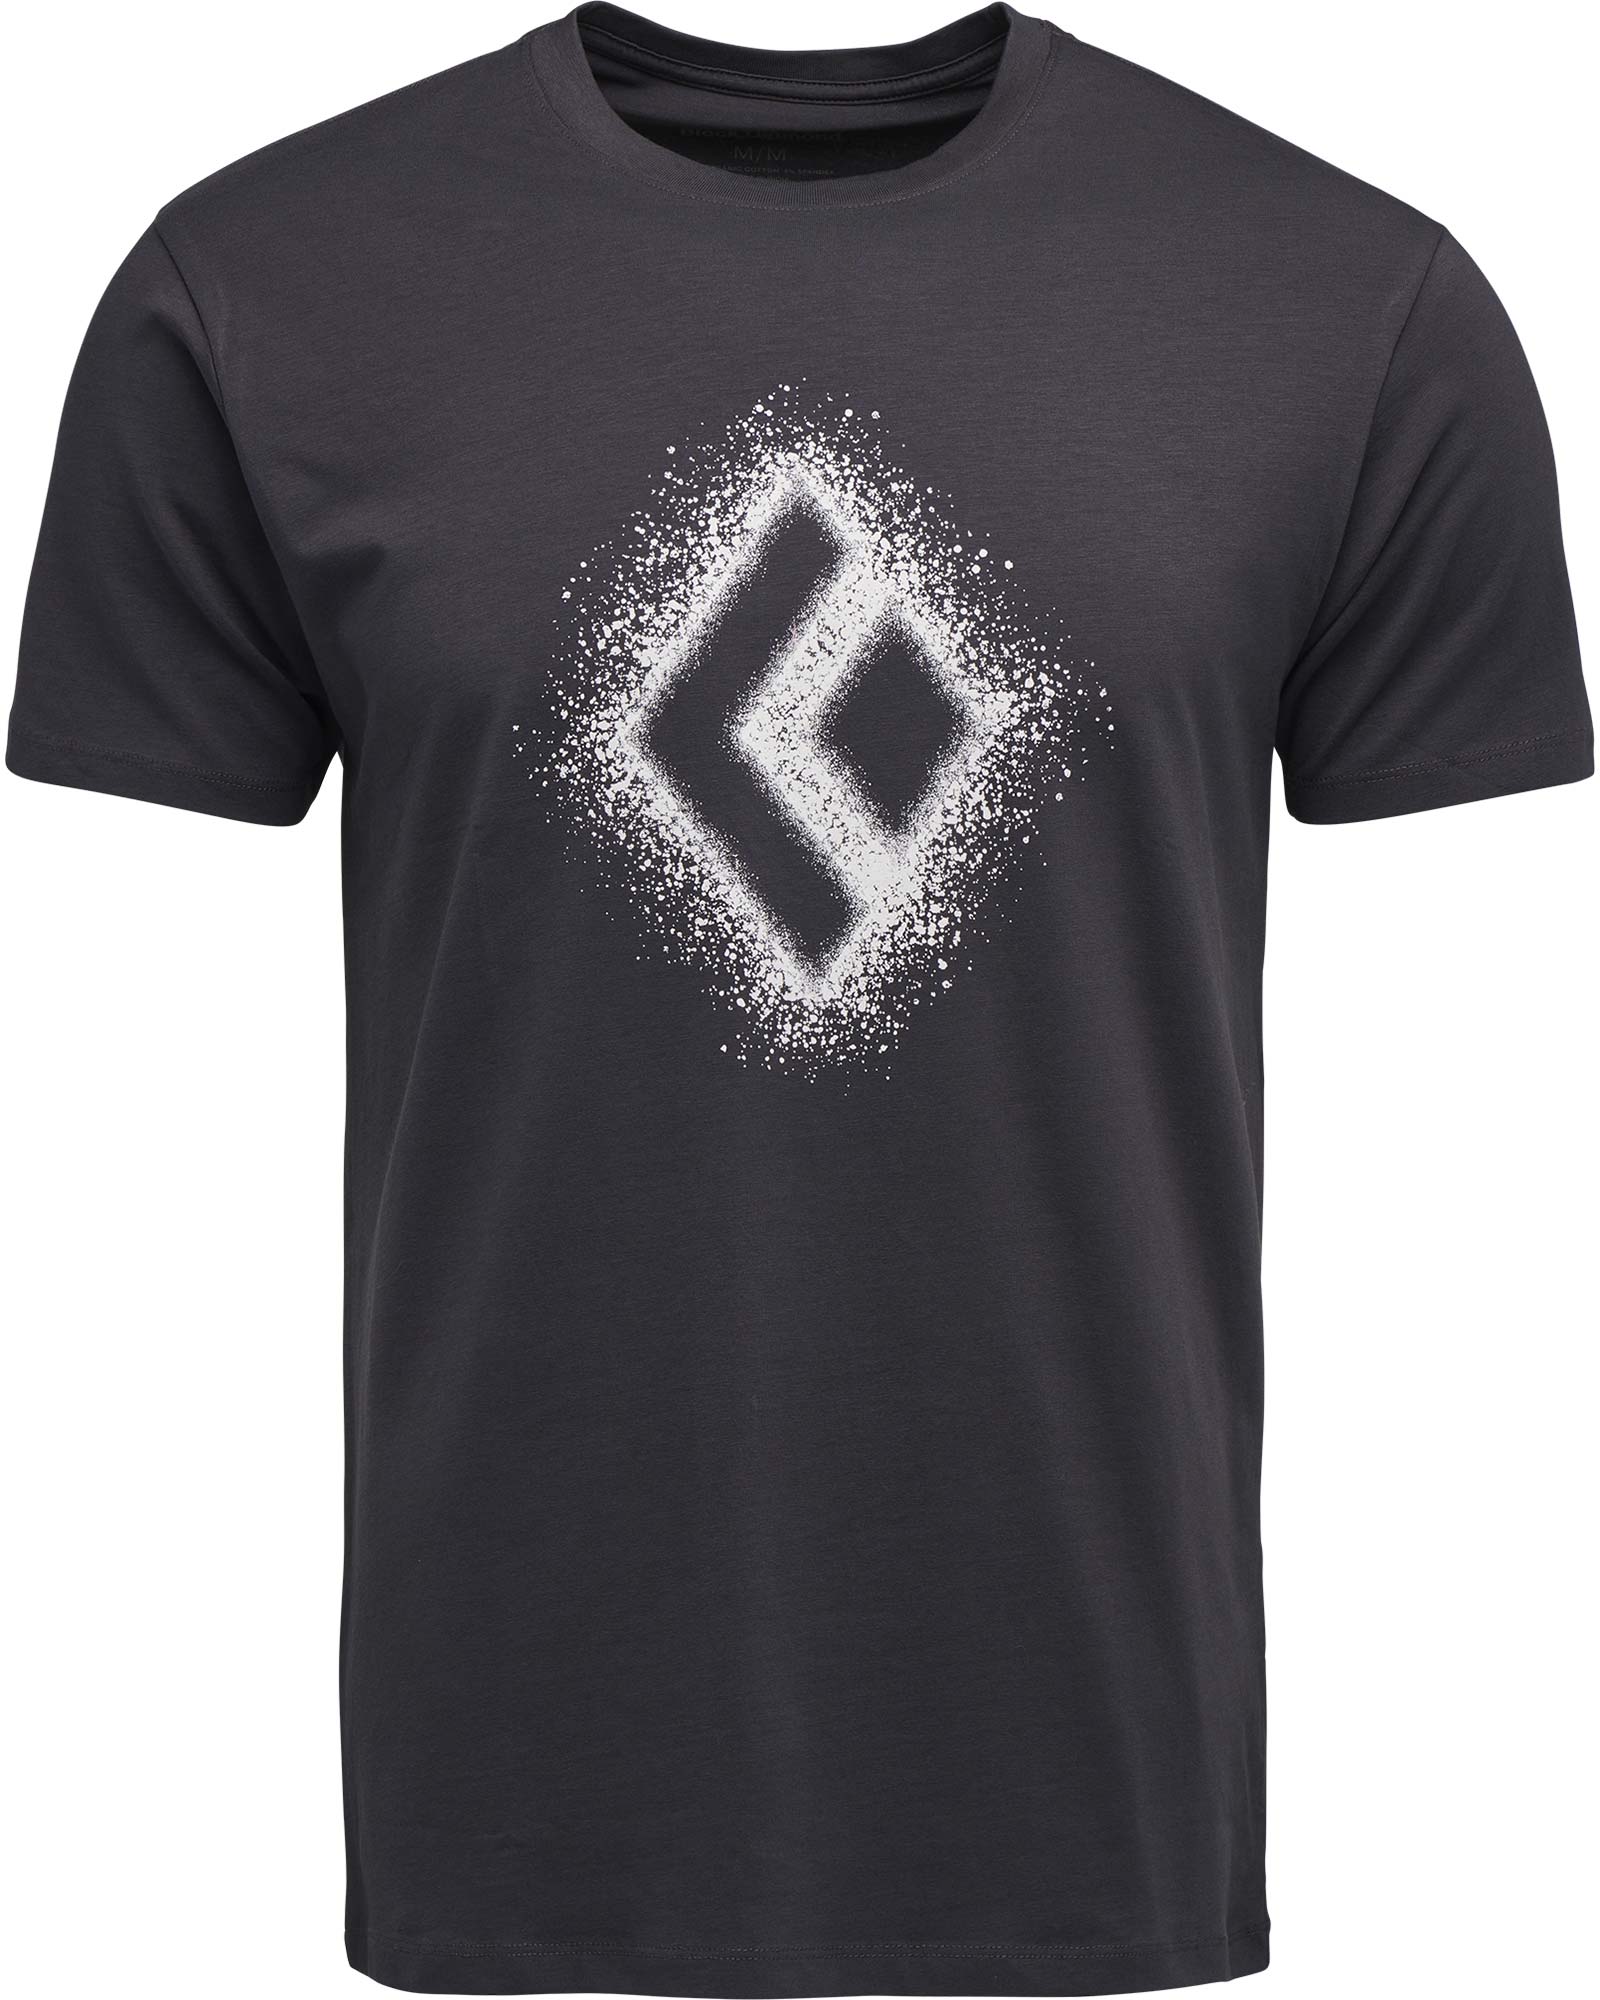 Black Diamond Men's Chalked Up 2.0 T-Shirt